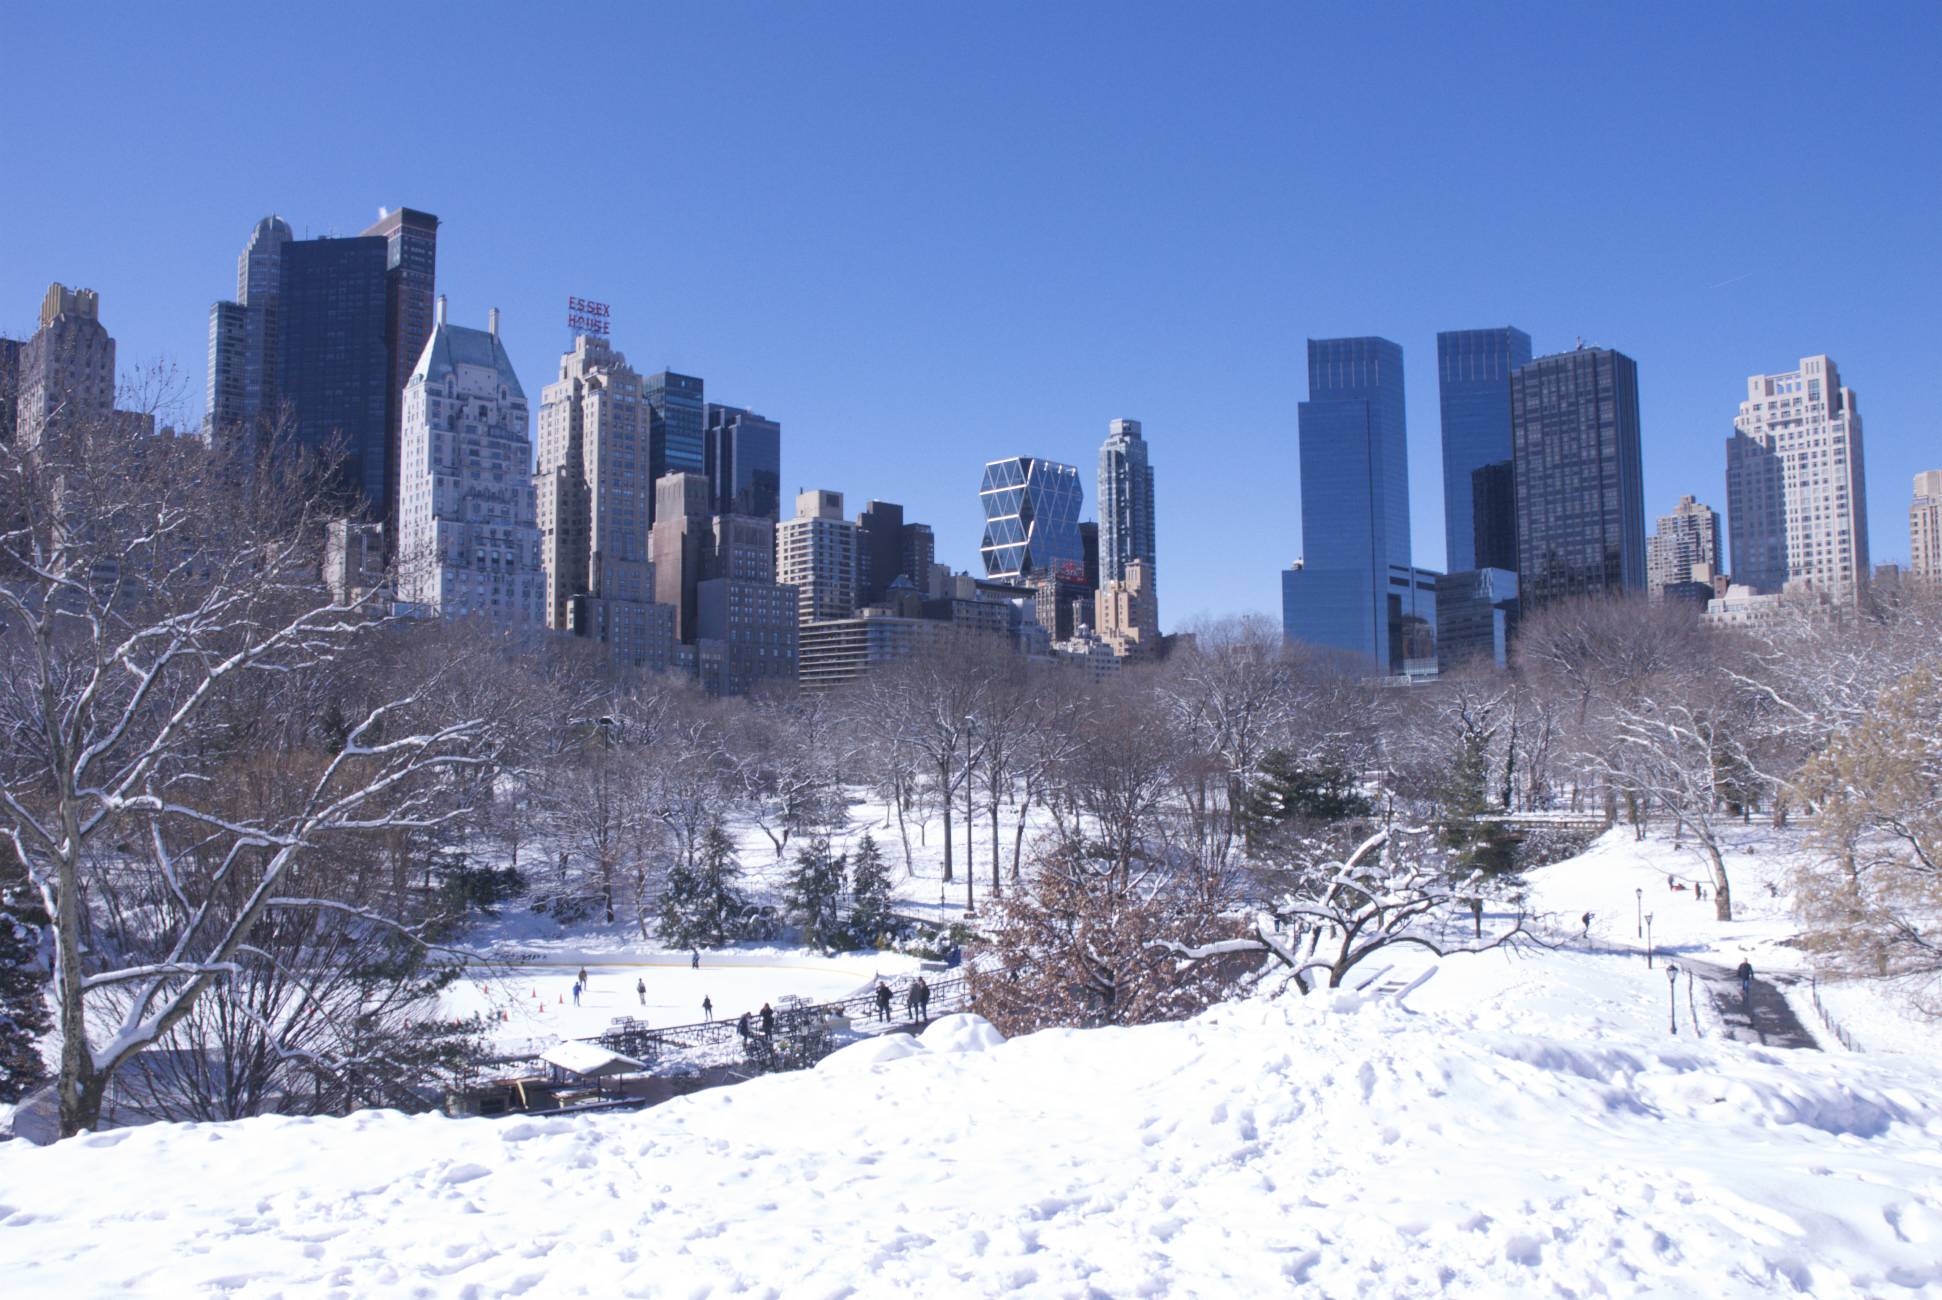 Central Park - Bulding & snow